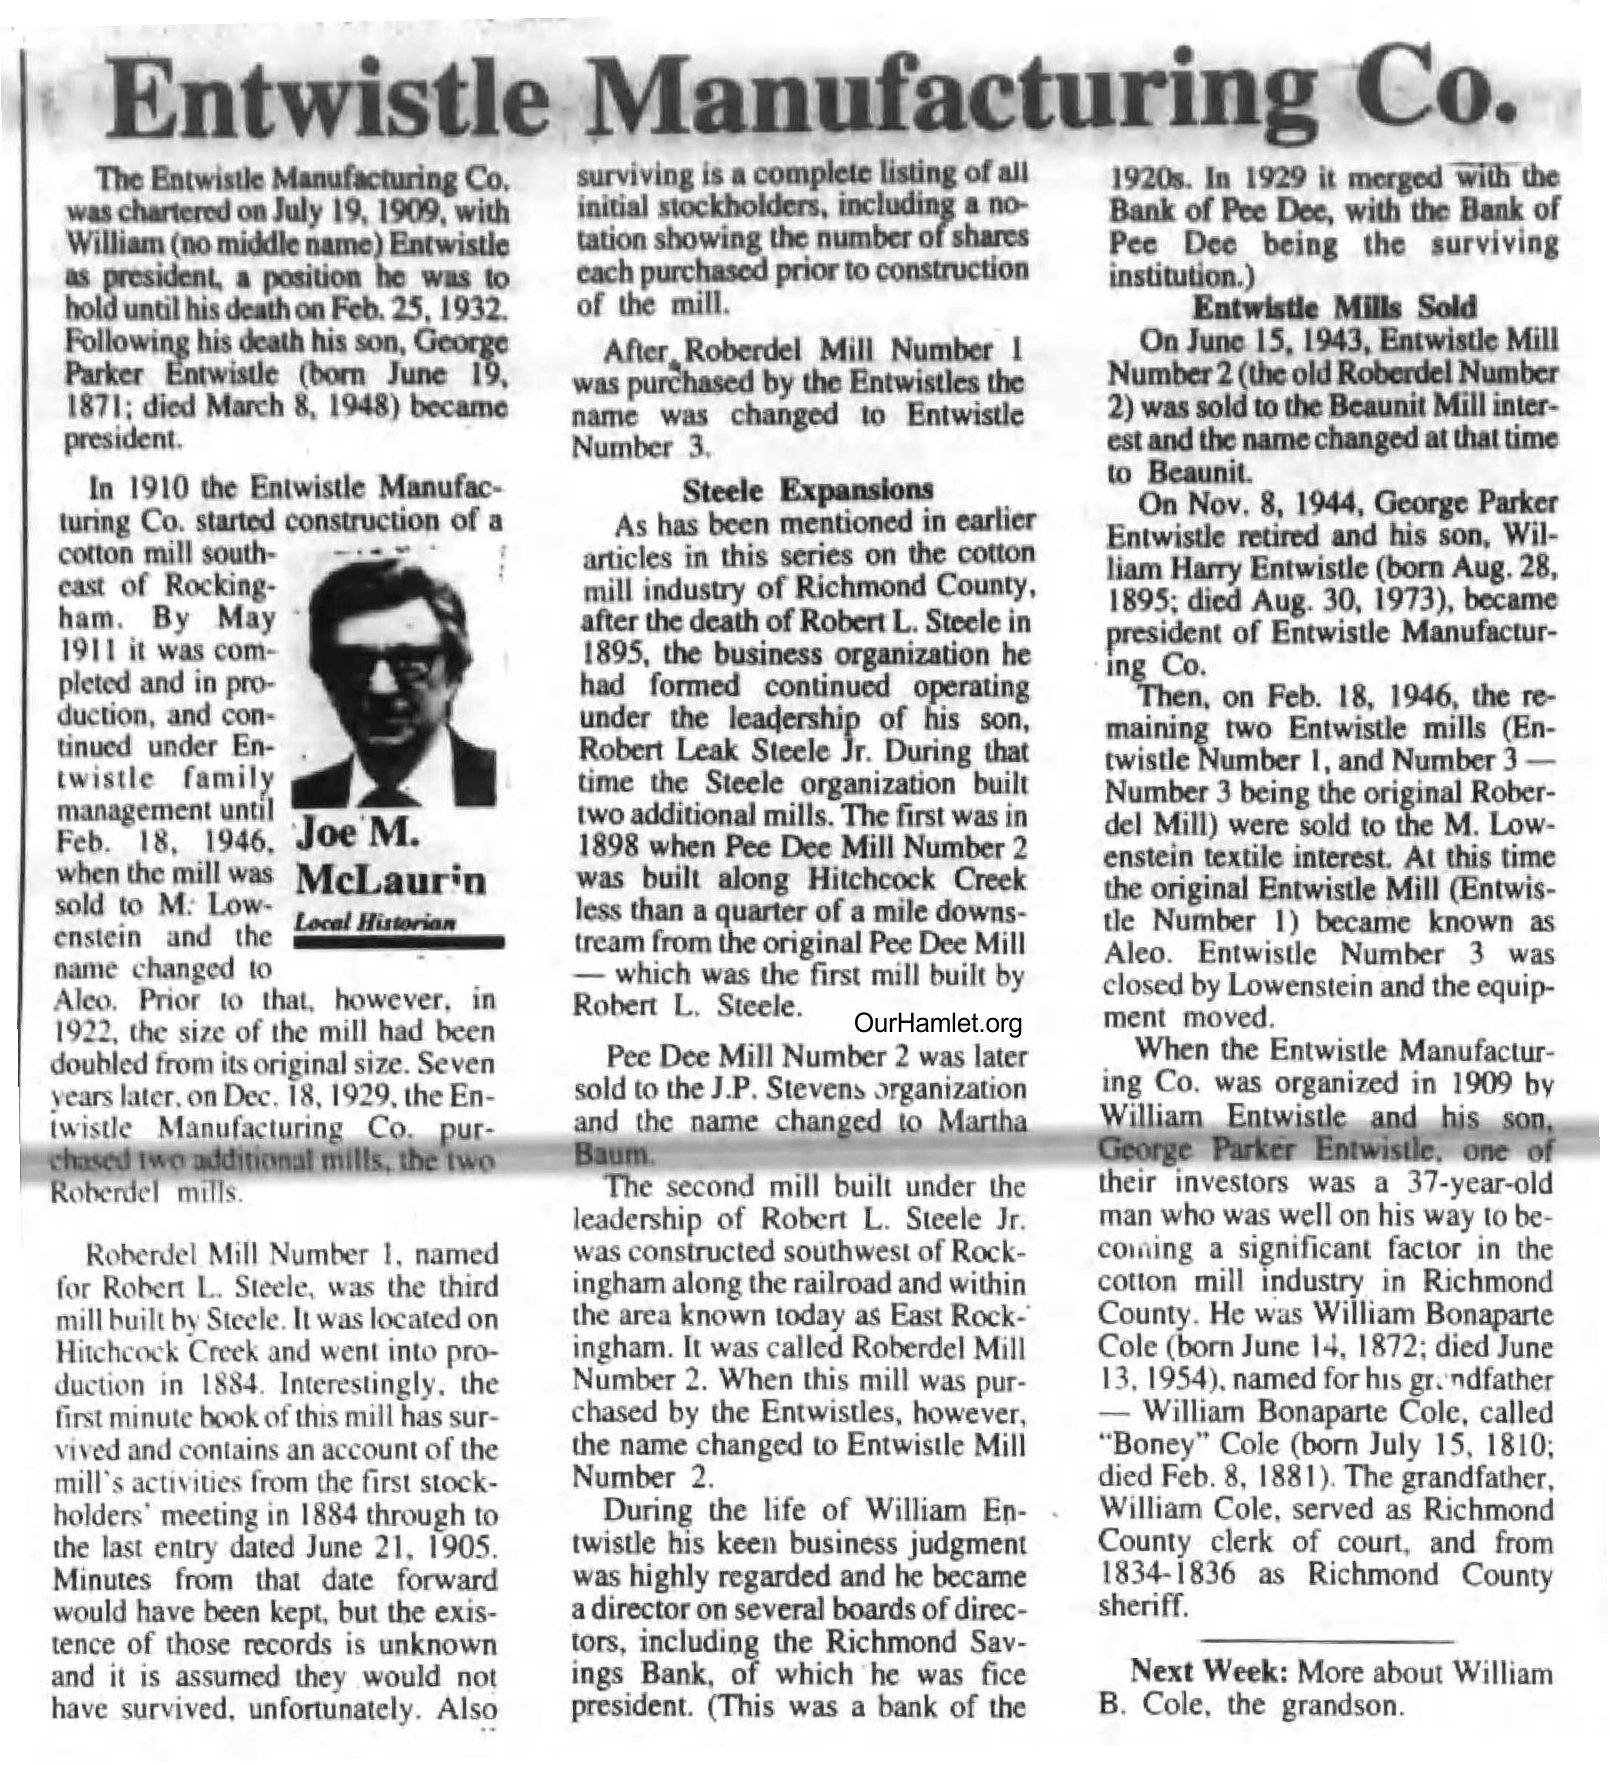 Joe McLaurin Entwistle Manufacturing Co. OH.jpg